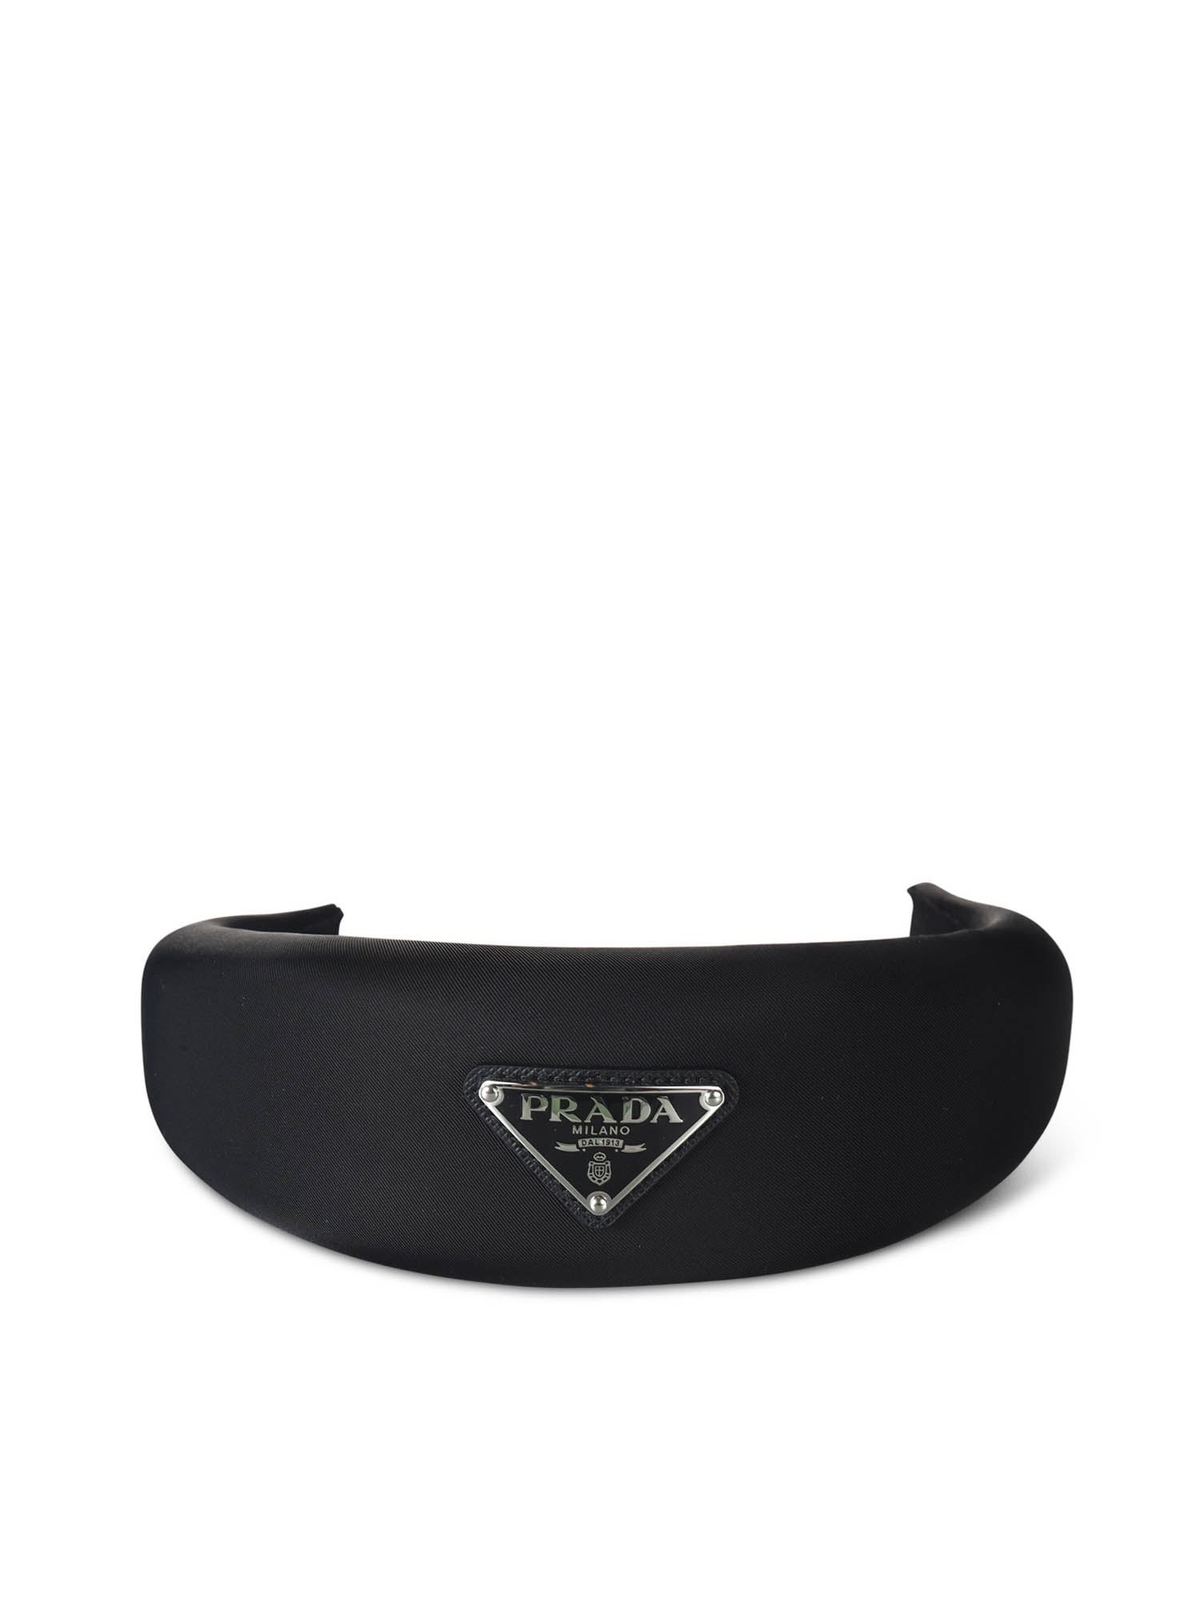 prada black headband